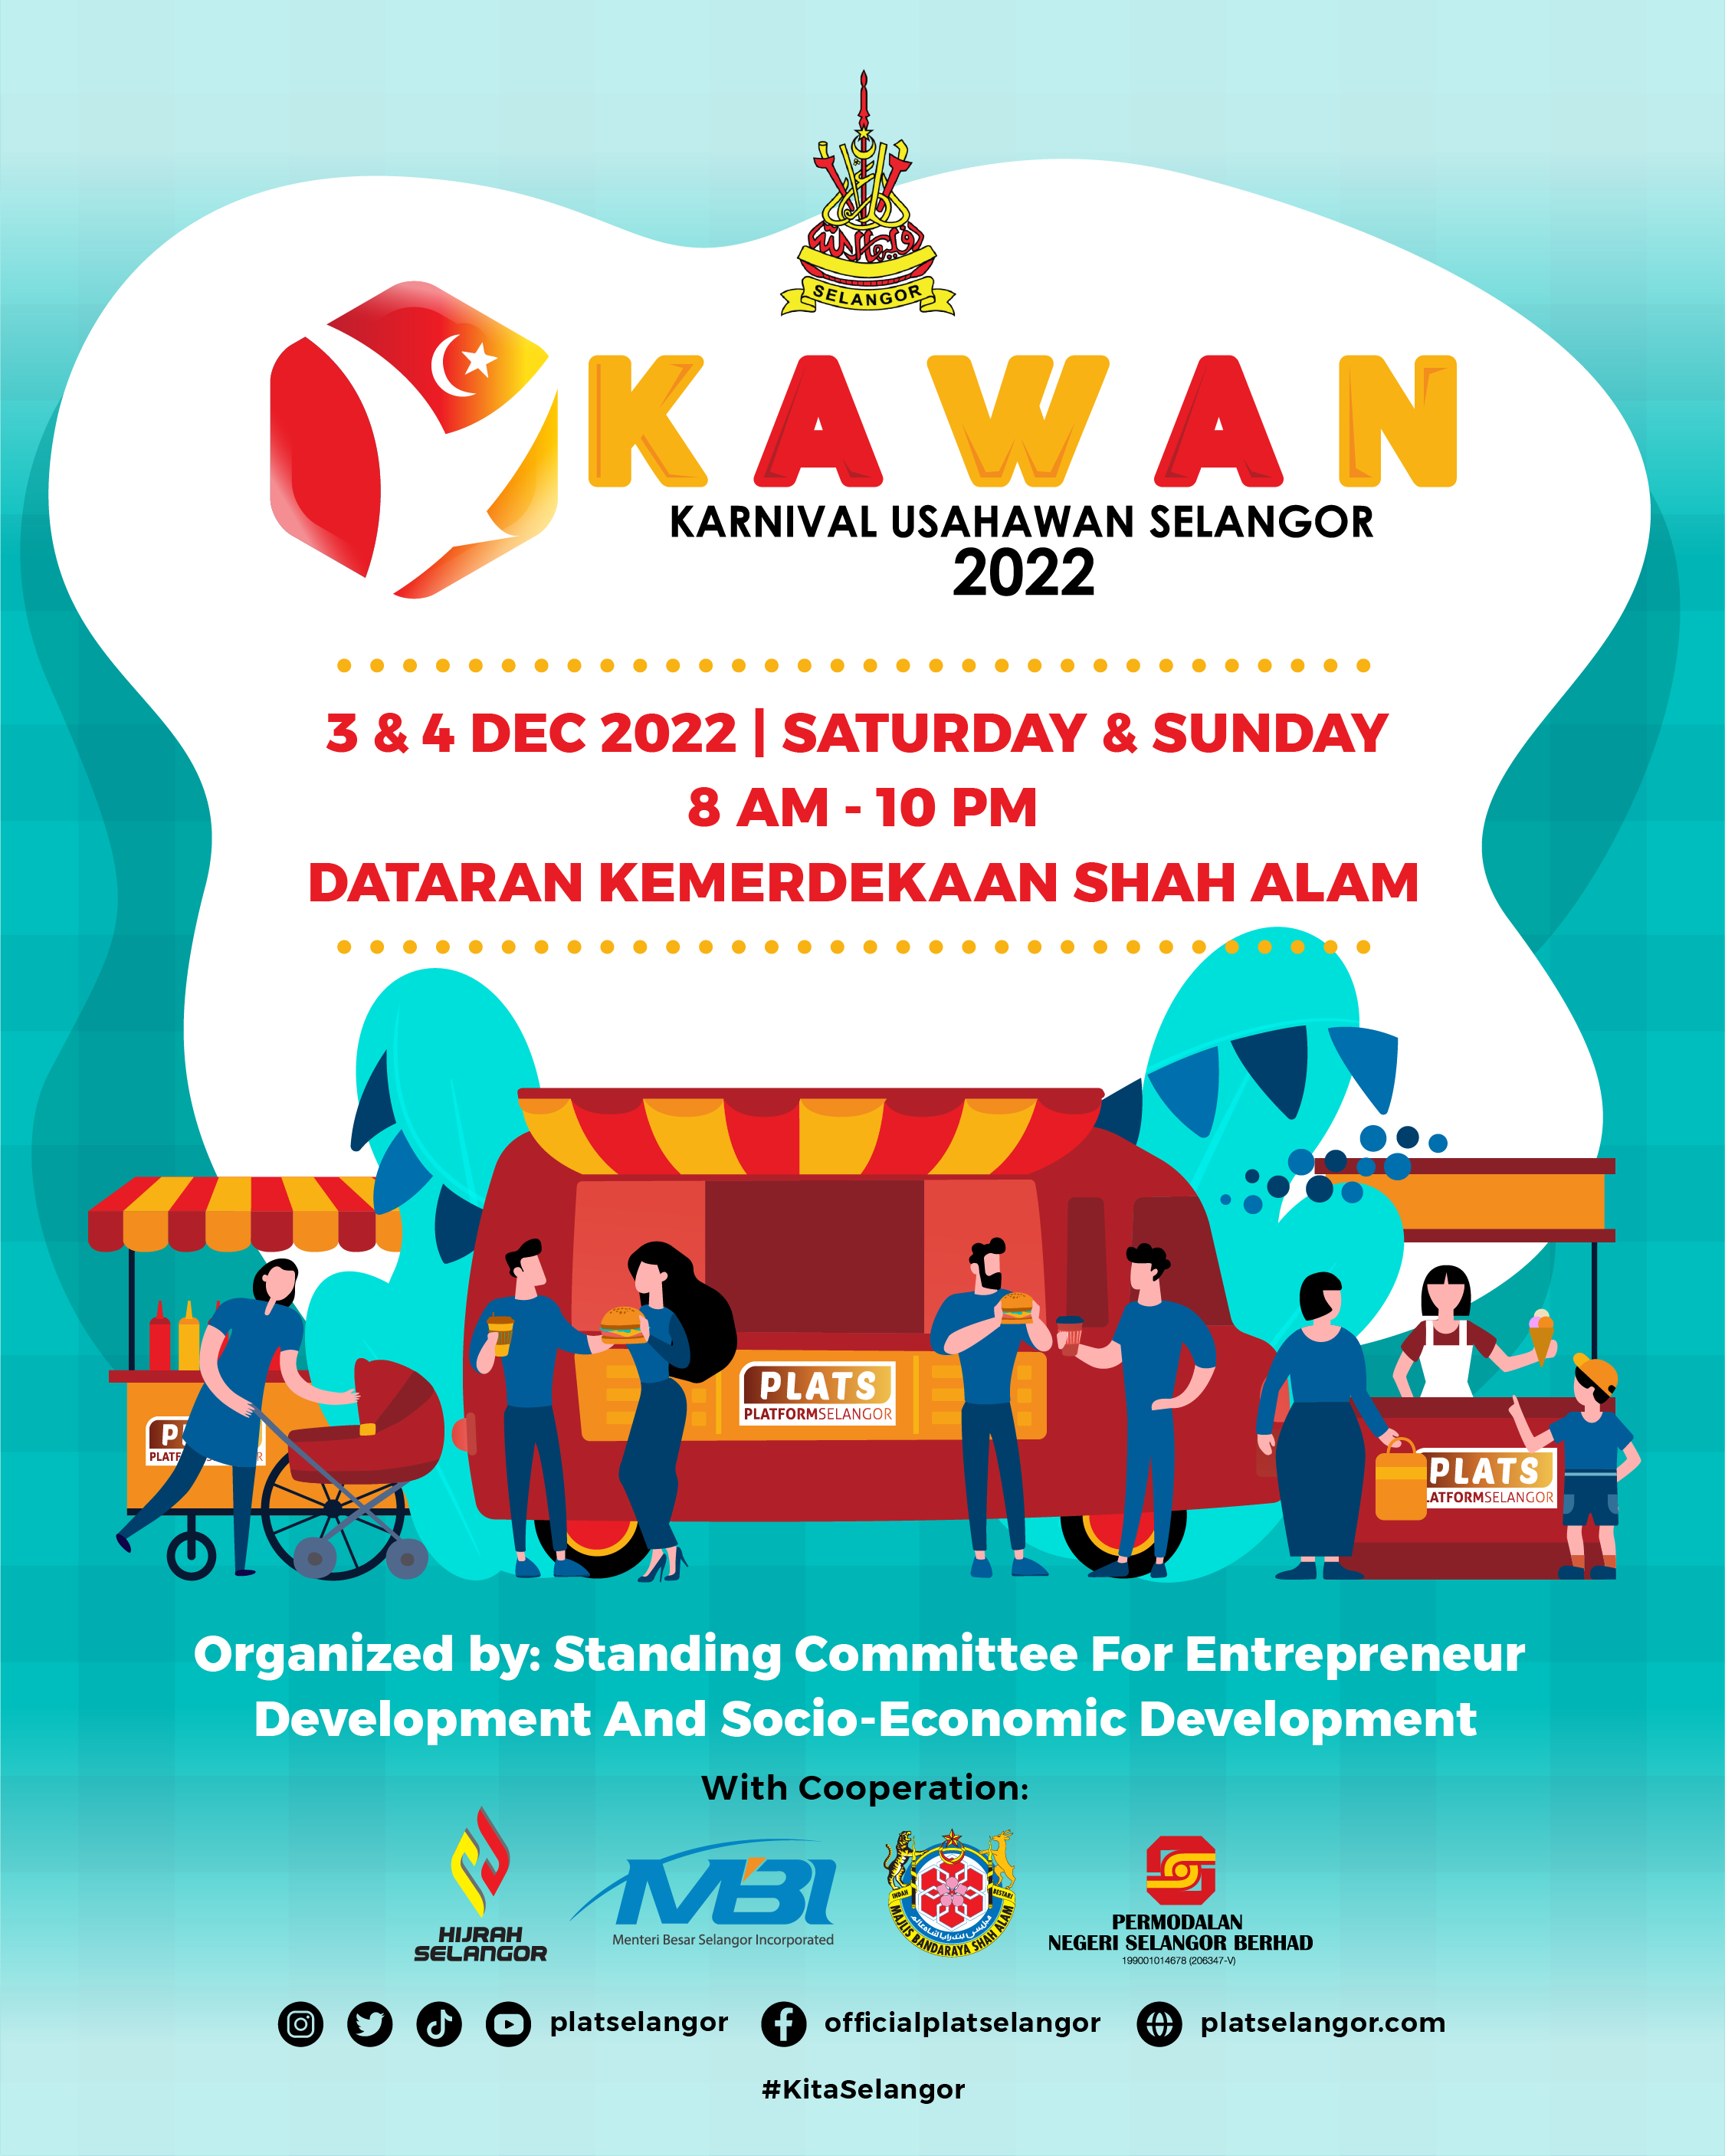 Fiesta plats @ kawan 2022 by pnsb to take place this weekend | weirdkaya